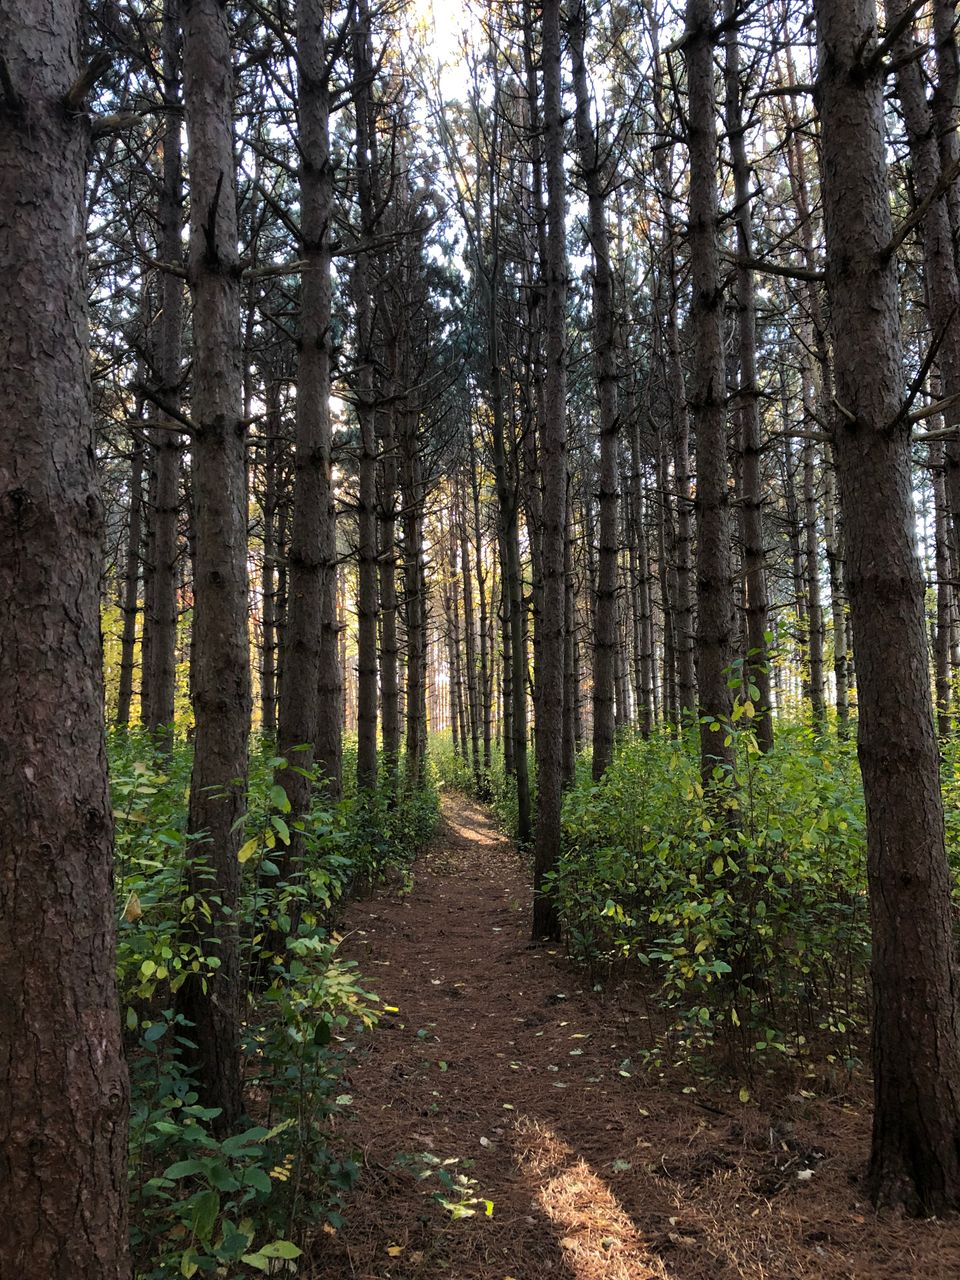 A slender, sun-dappled path through a pine forest.